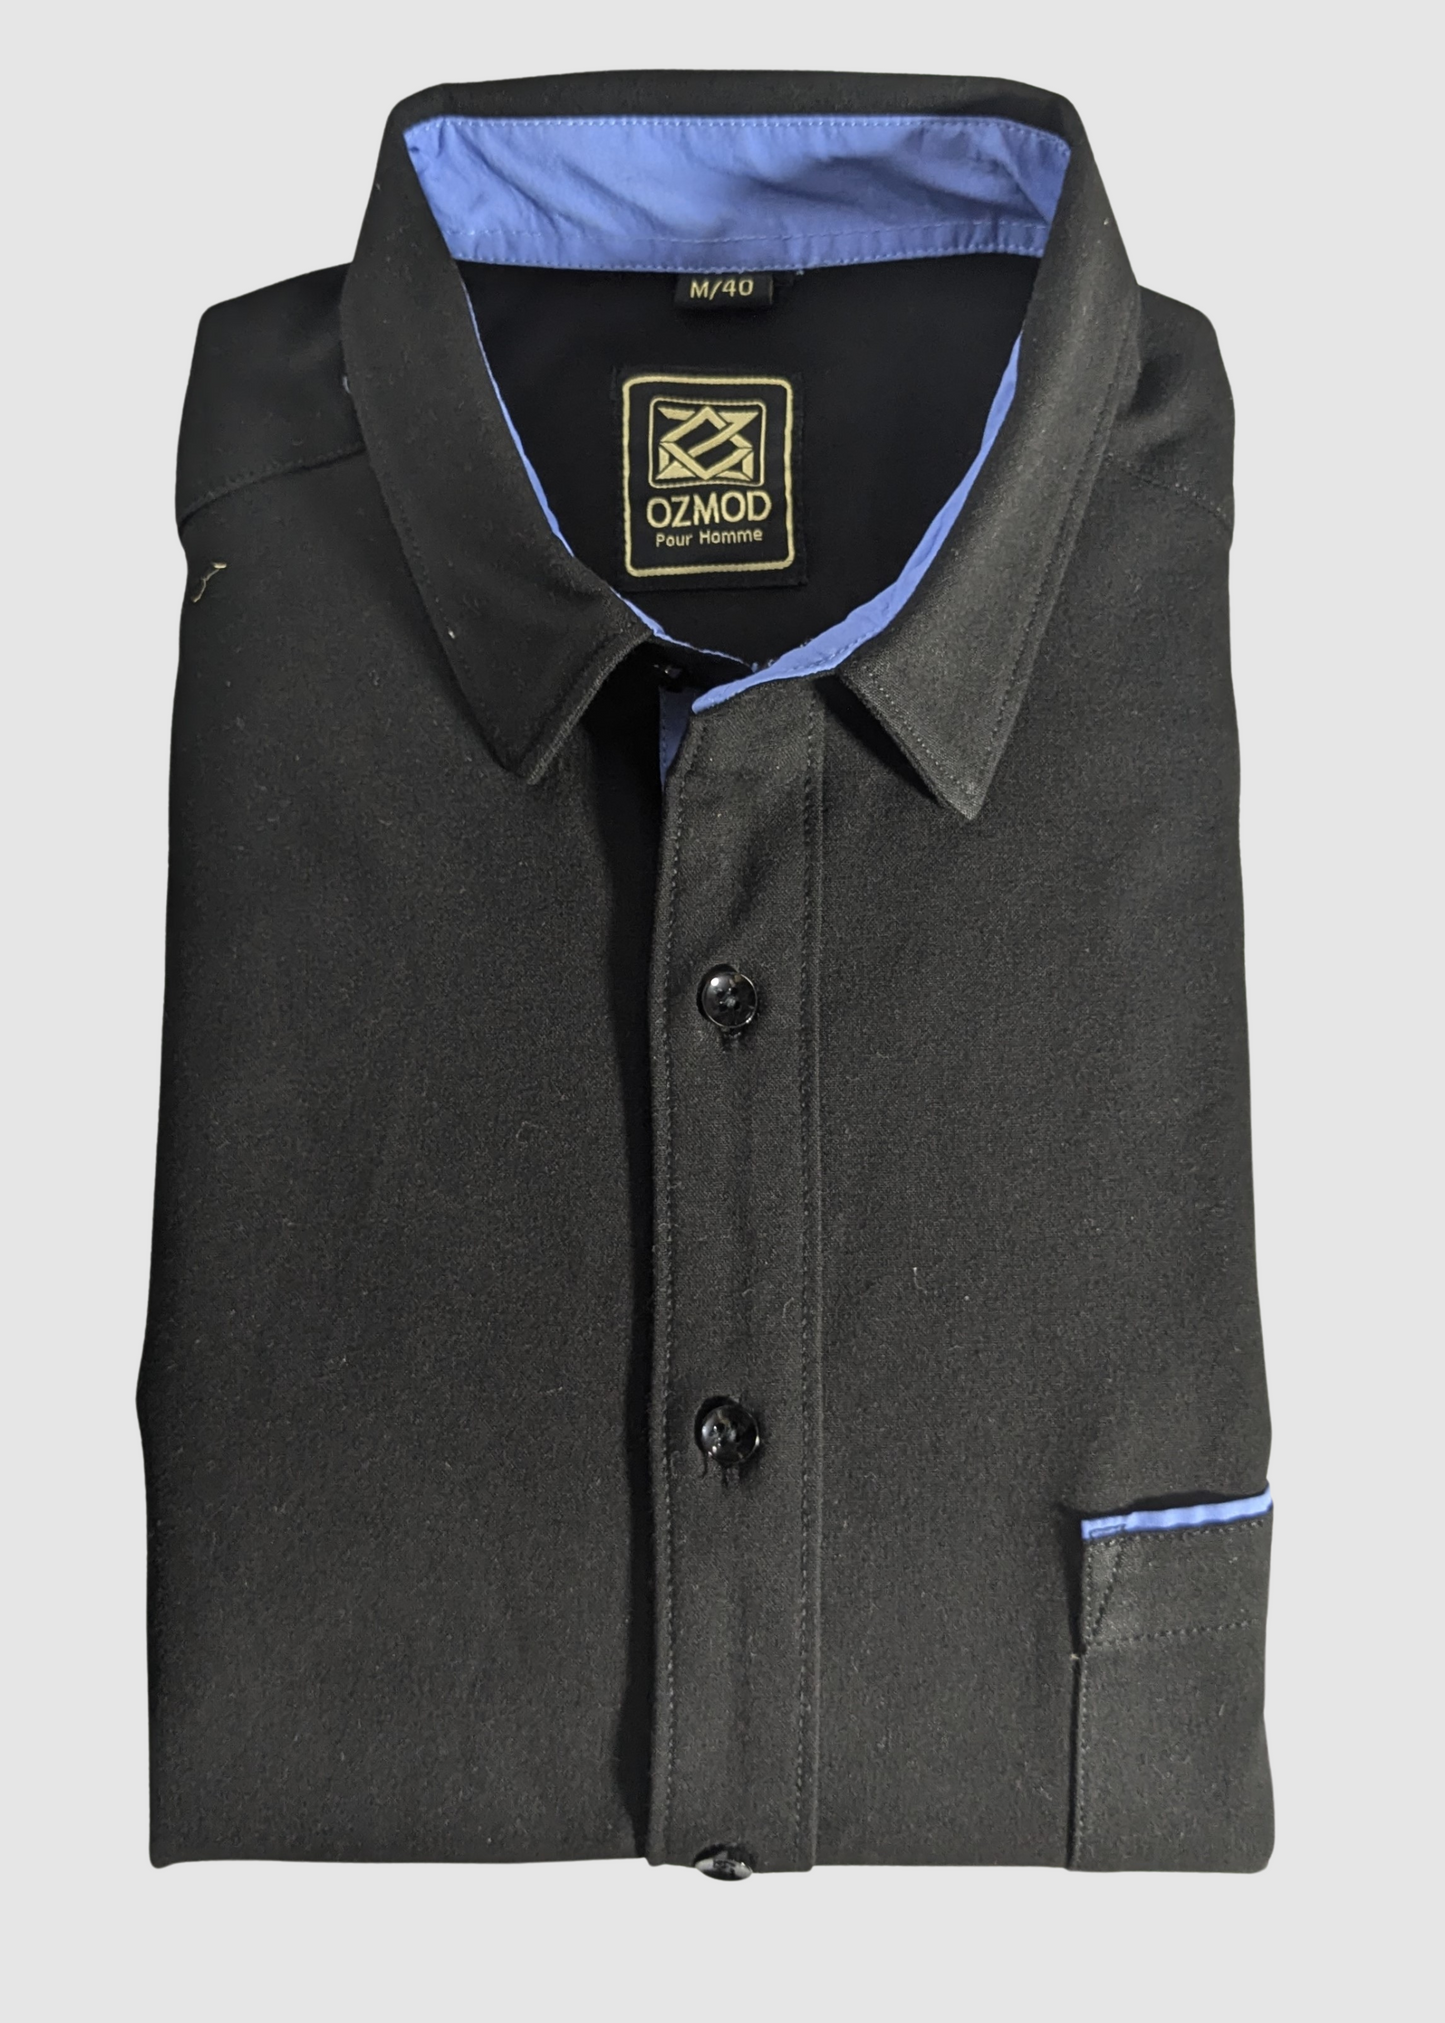 Black Contrast Men Shirt in POLYSPANDEX with Full Sleeves & Single Pocket